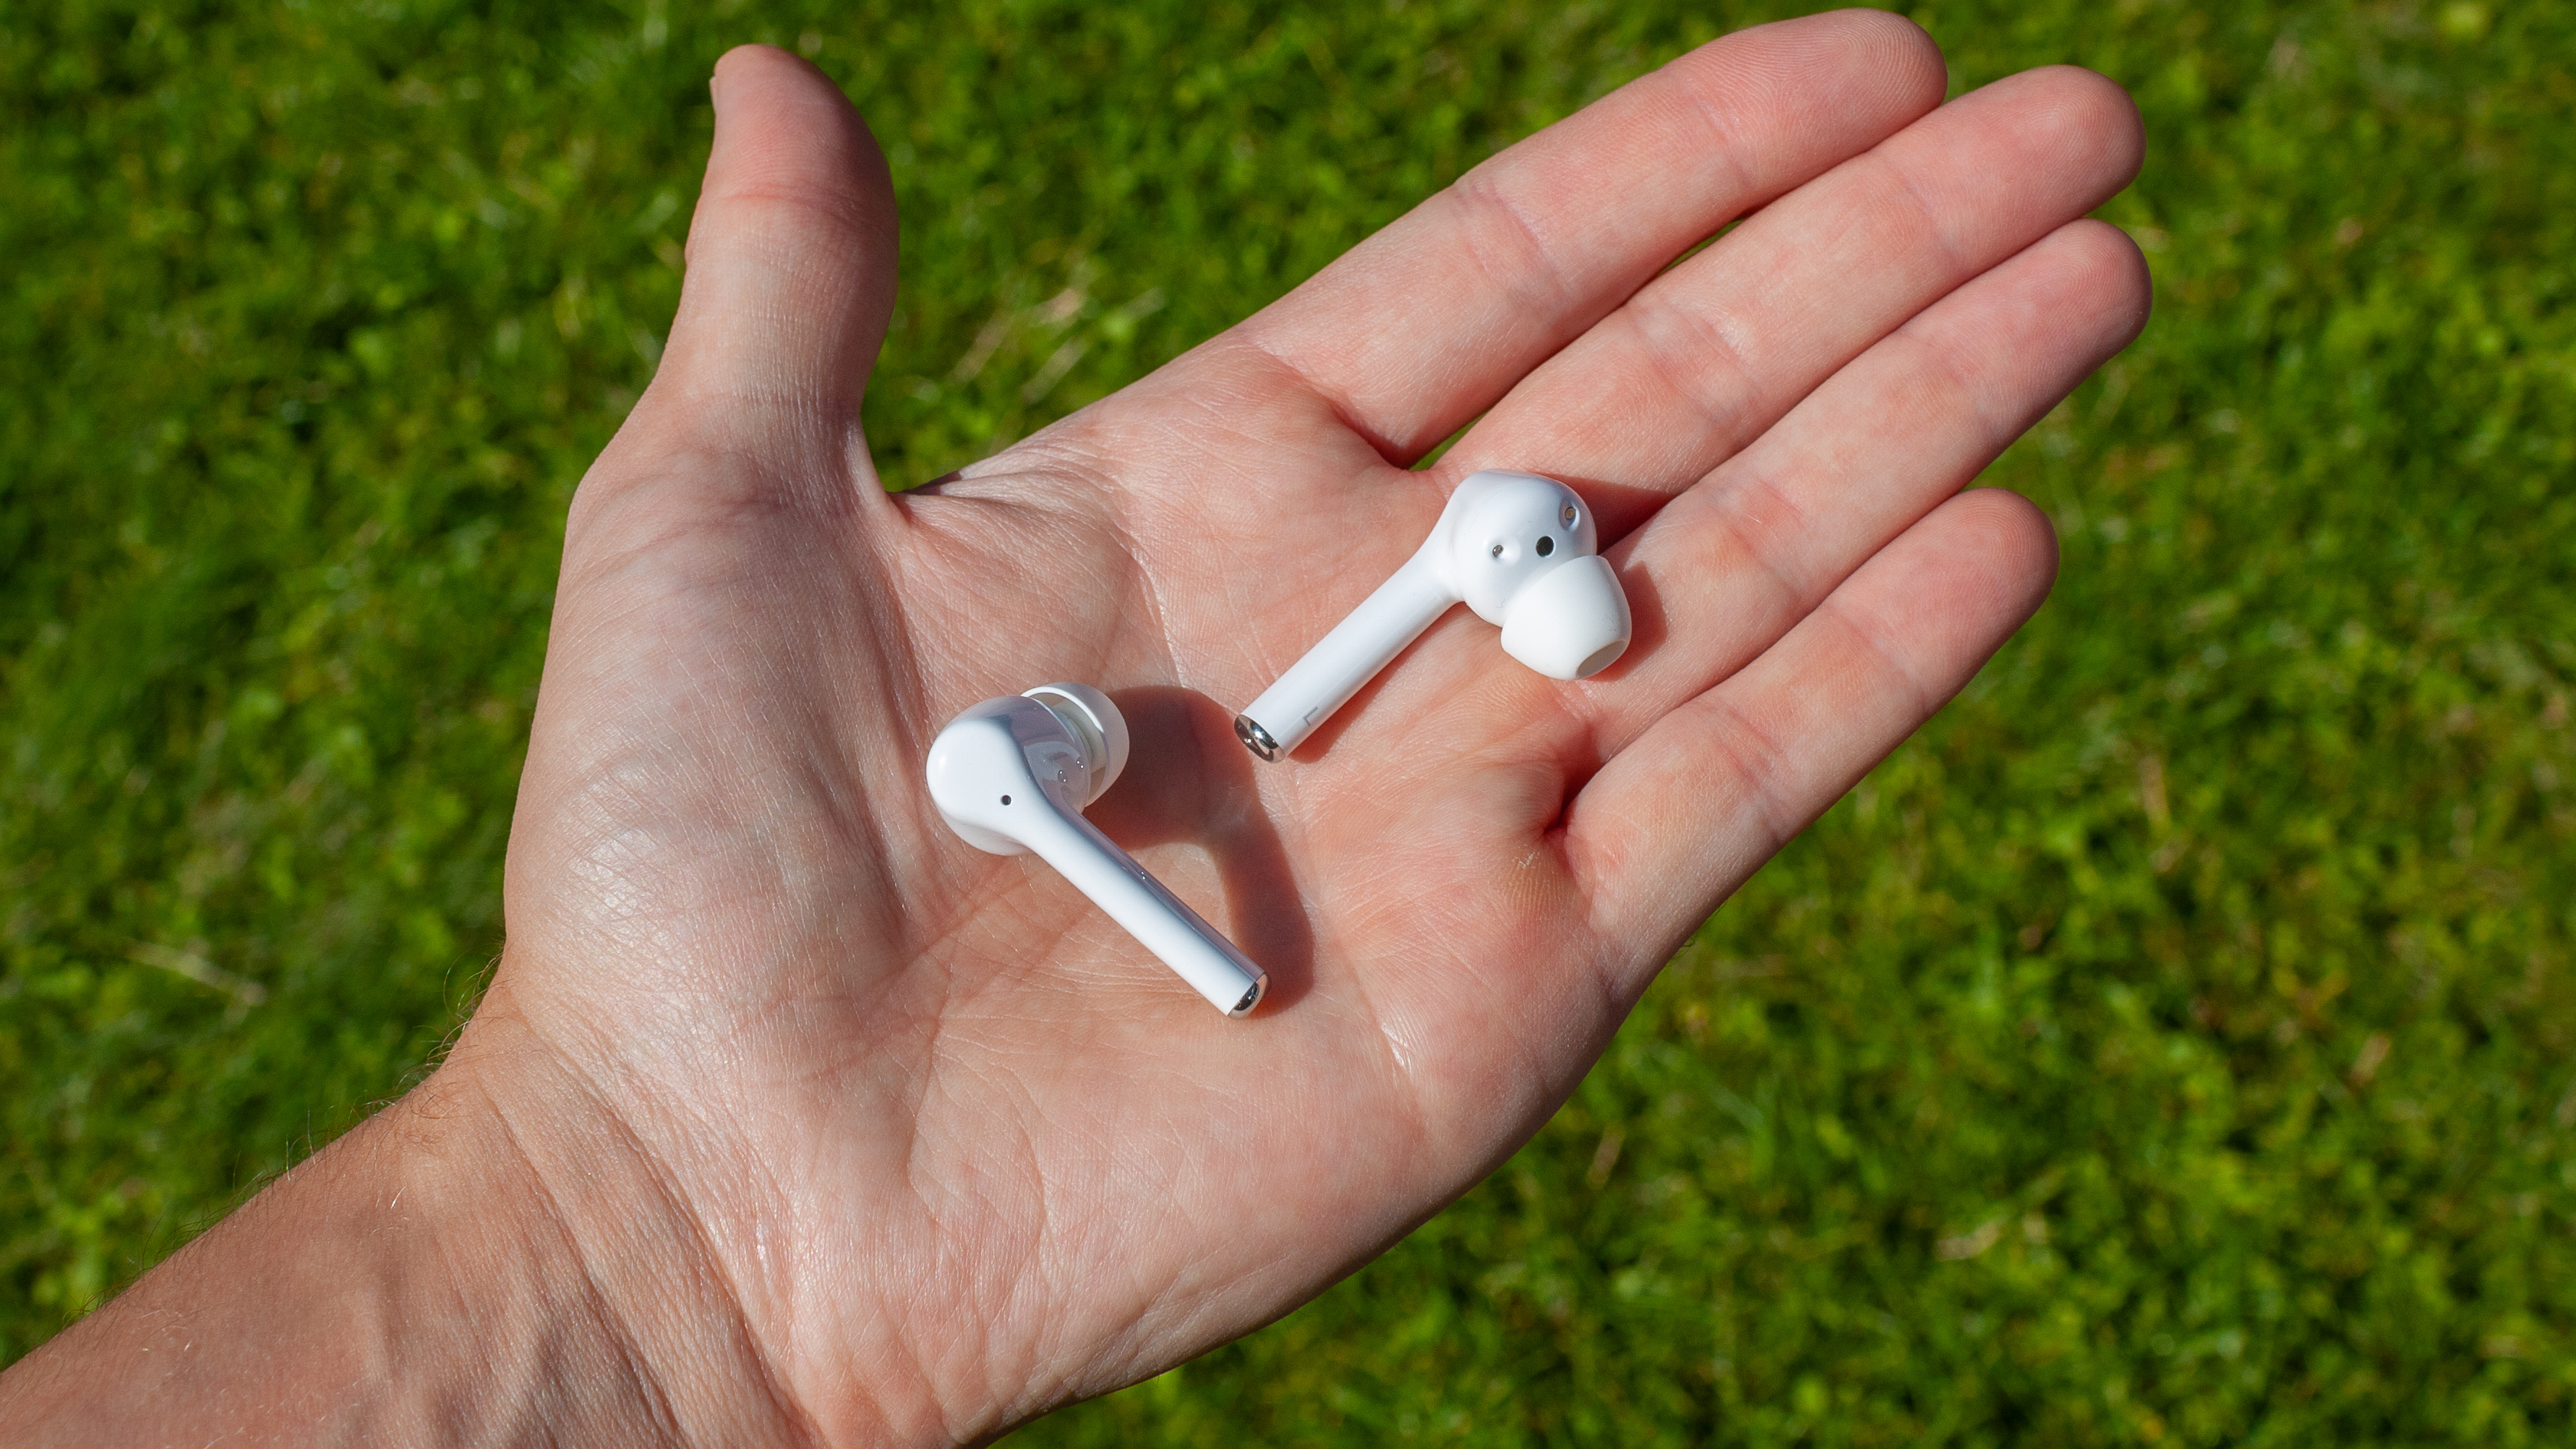 the Huawei FreeBuds 3i wireless earbuds in an open palm